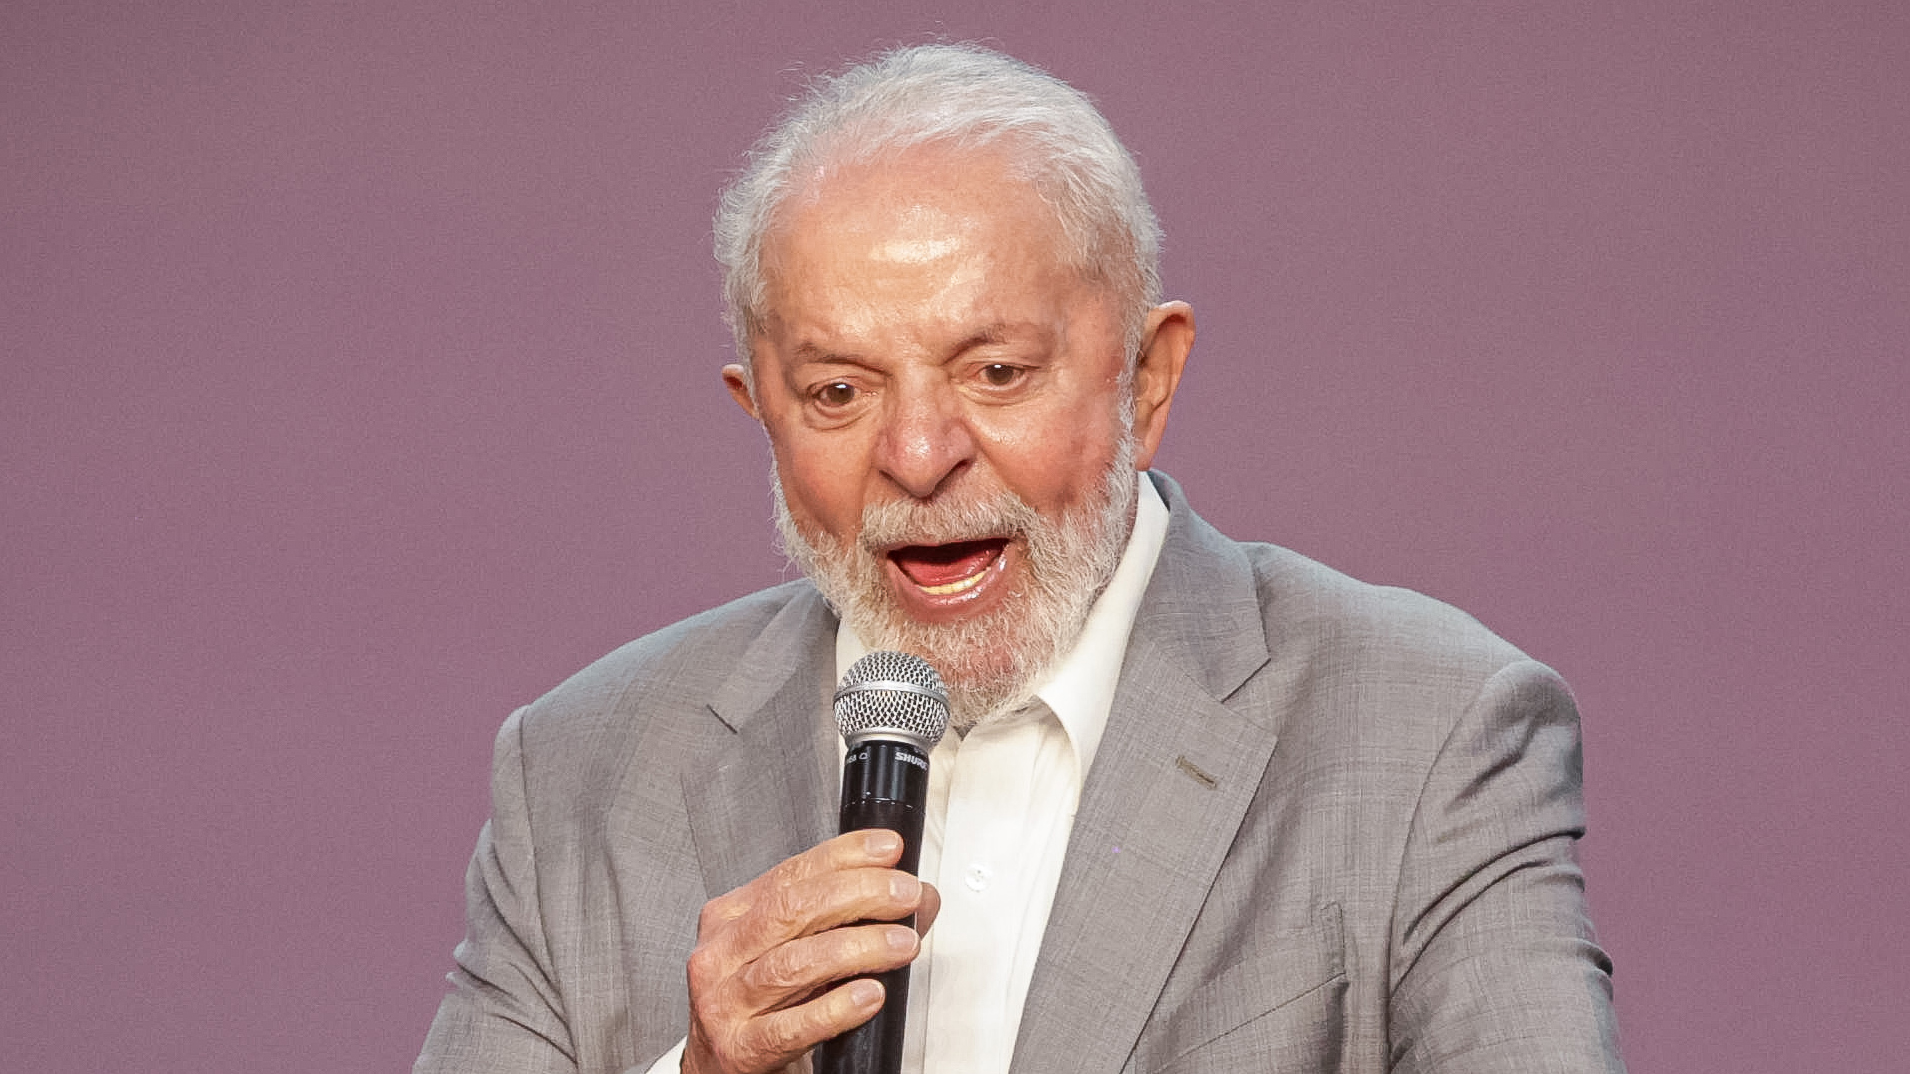 Netanyahu slams Lula for accusing Israel of Holocaust